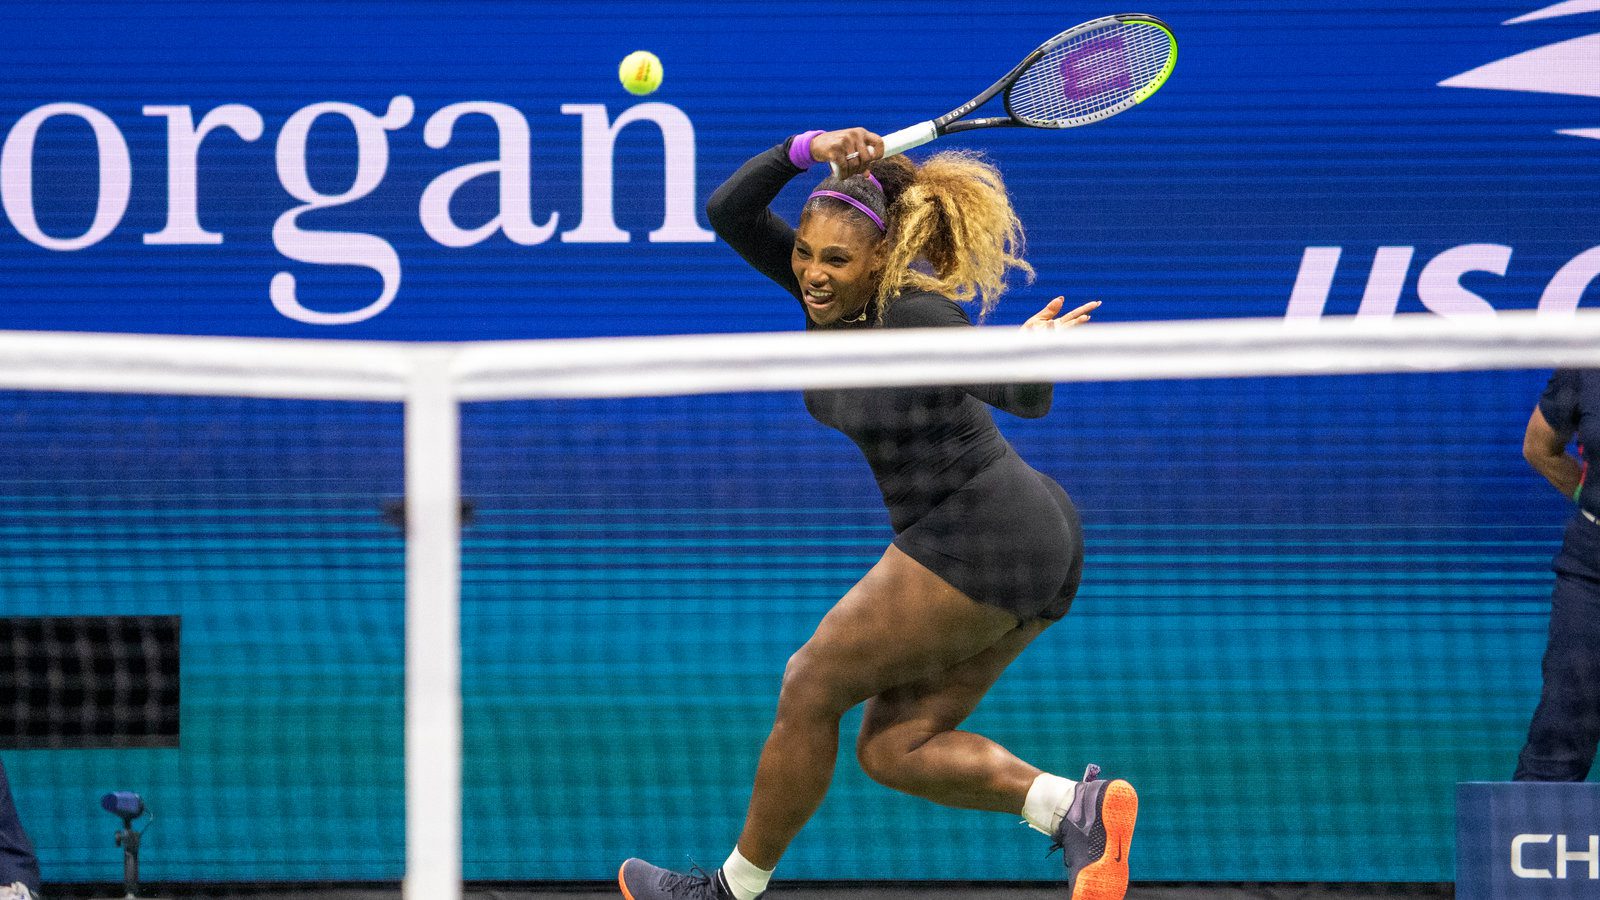 Serena Williams’ net worth